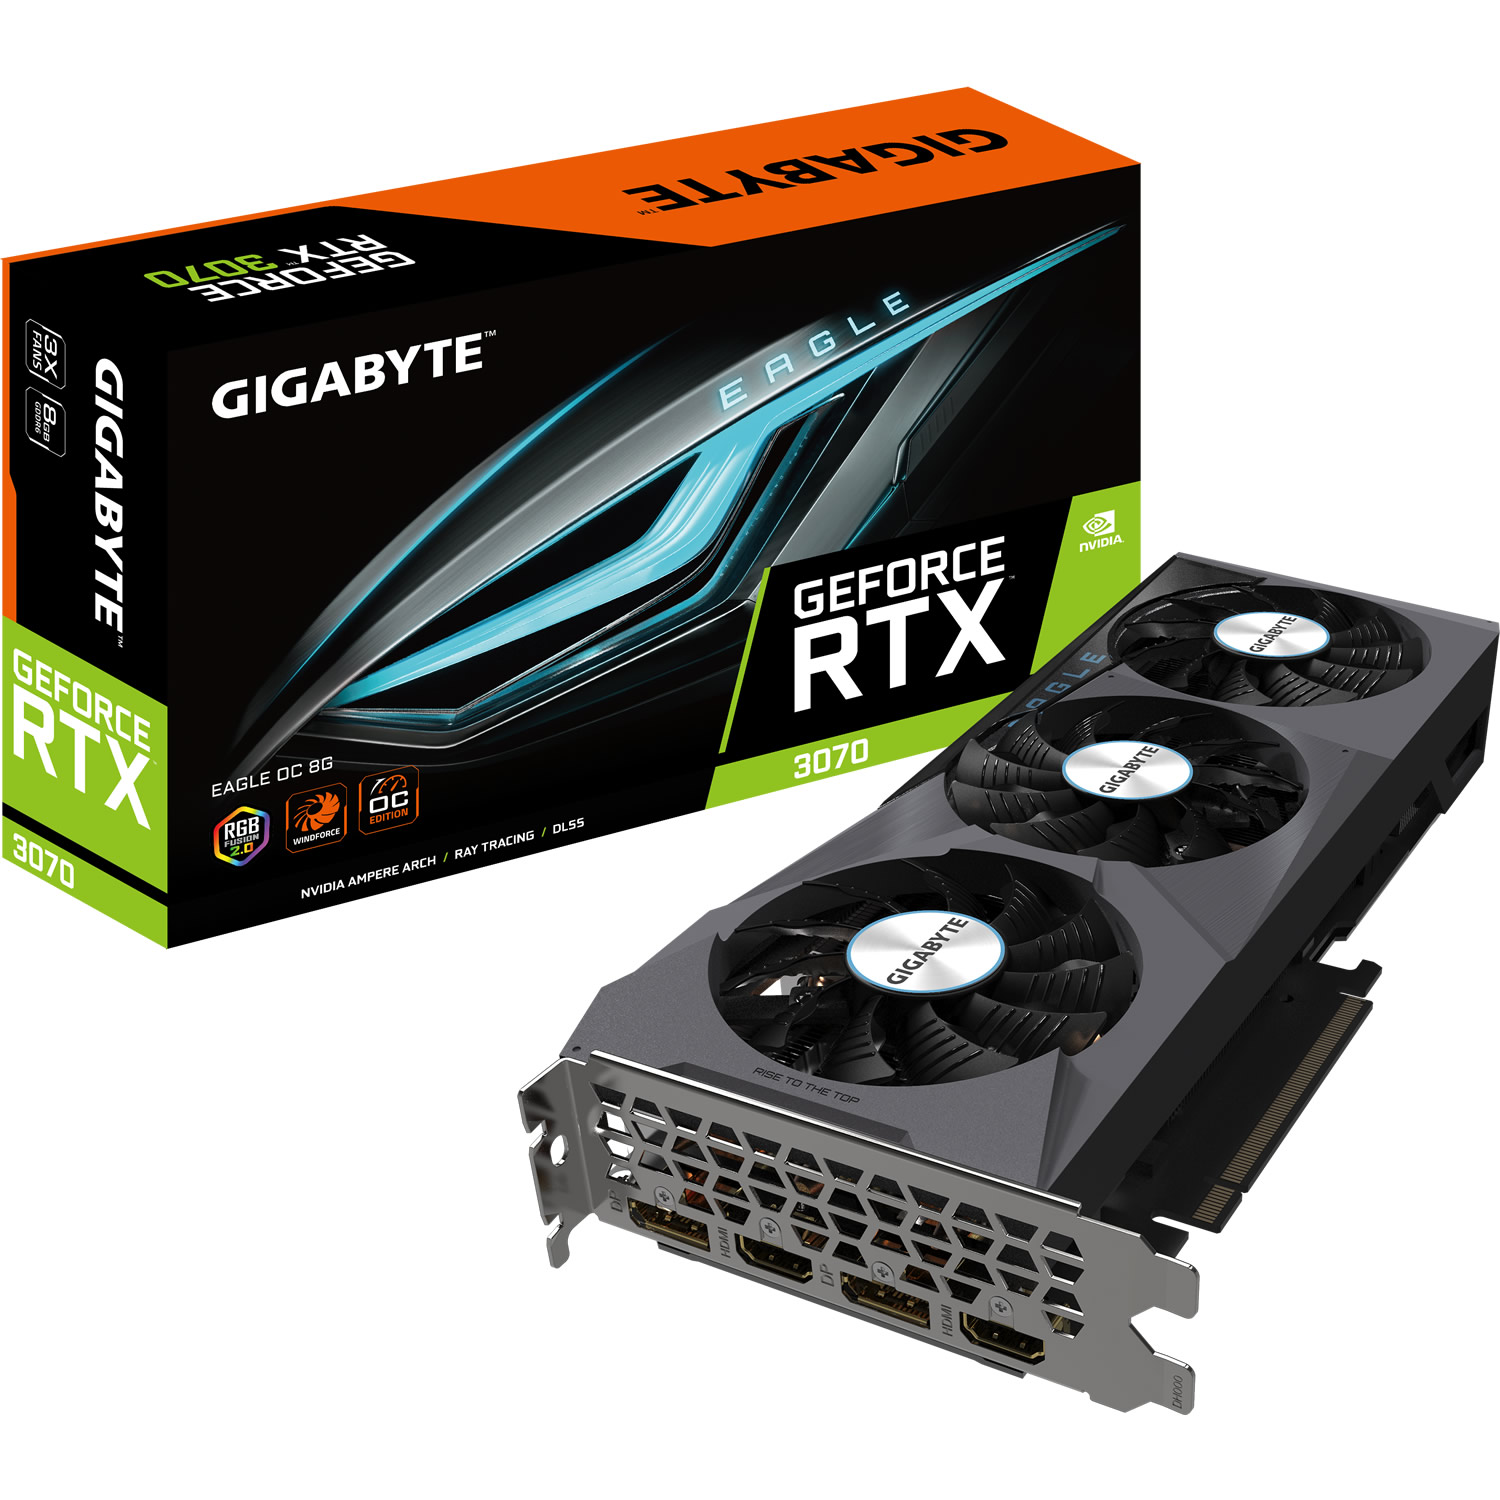 Gigabyte - Gigabyte GeForce RTX 3070 Eagle V2 LHR 8GB GDDR6 PCI-Express Graphics Card